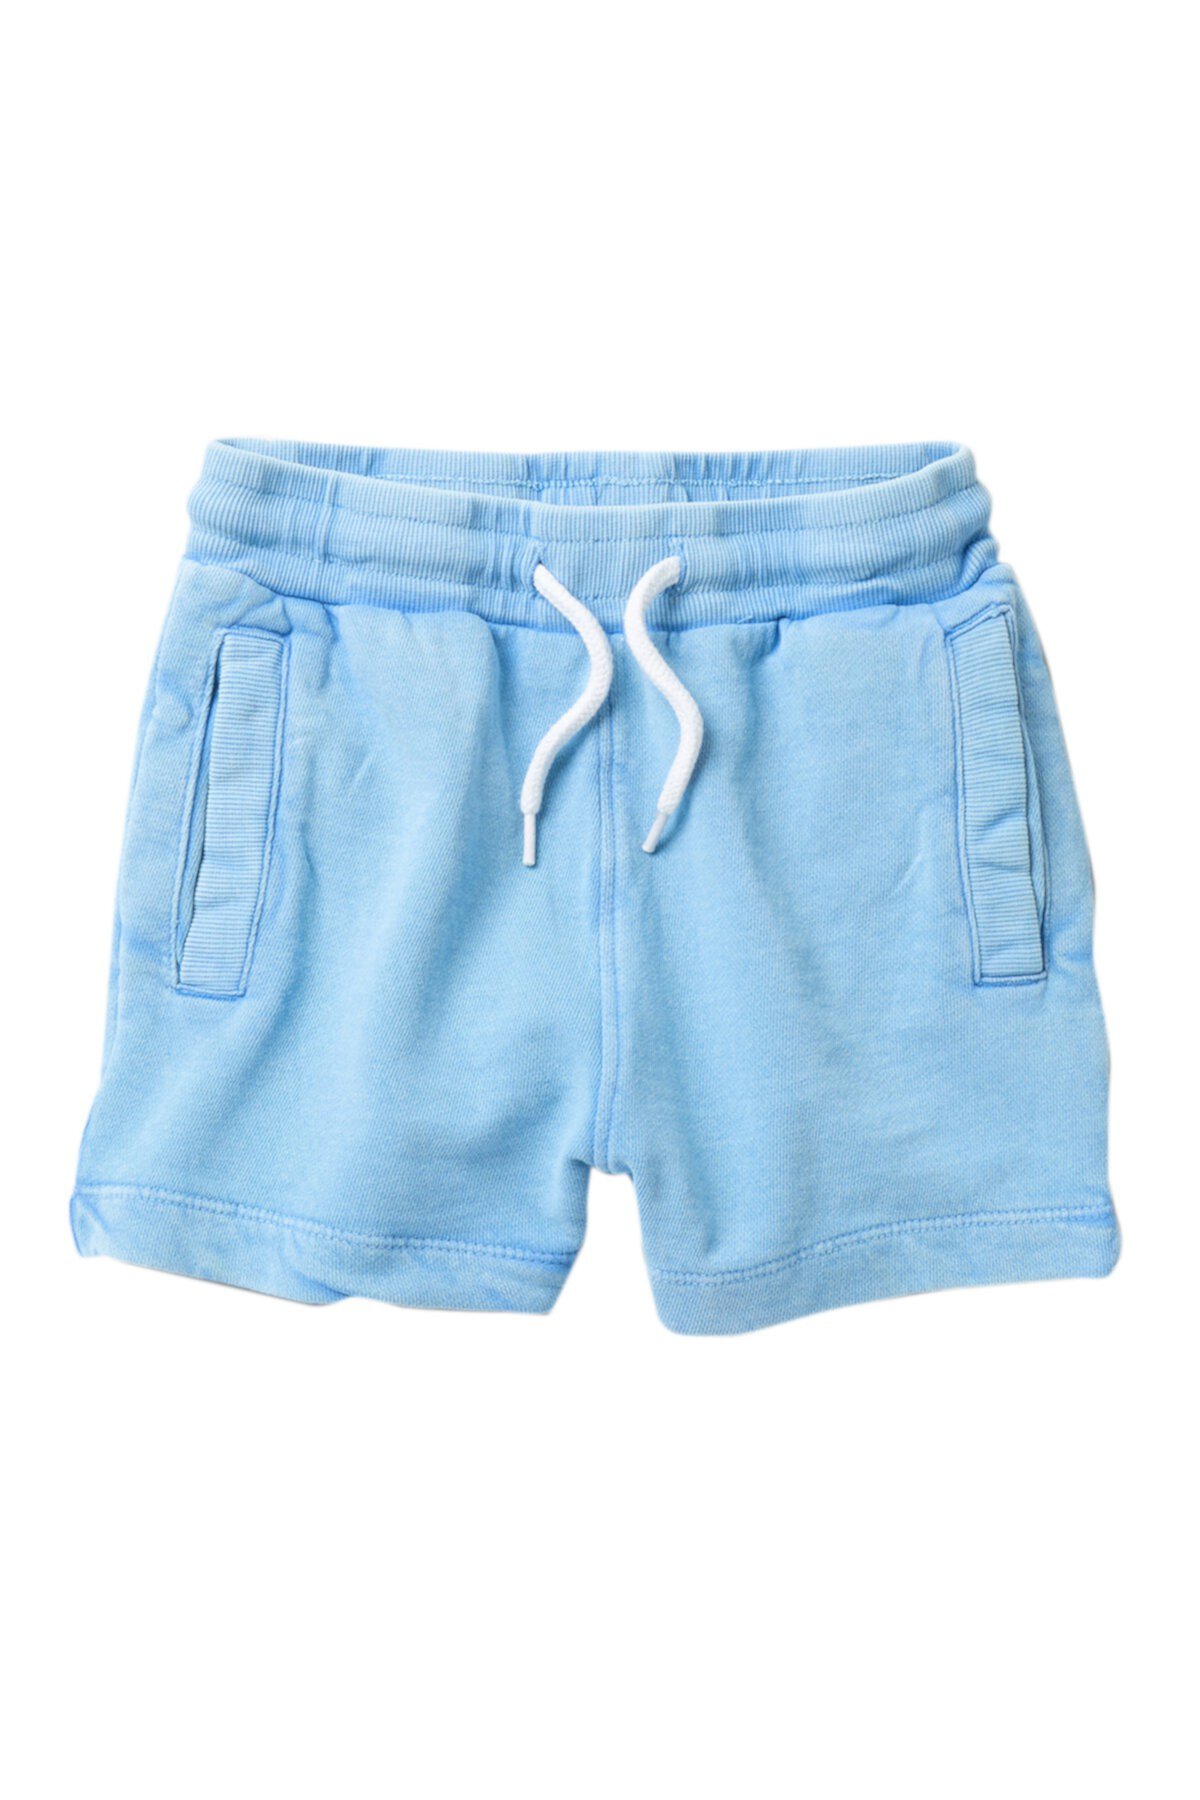 Mineral Wash Knit Shorts (Toddler, Little Boys, & Big Boys) Petit Lem